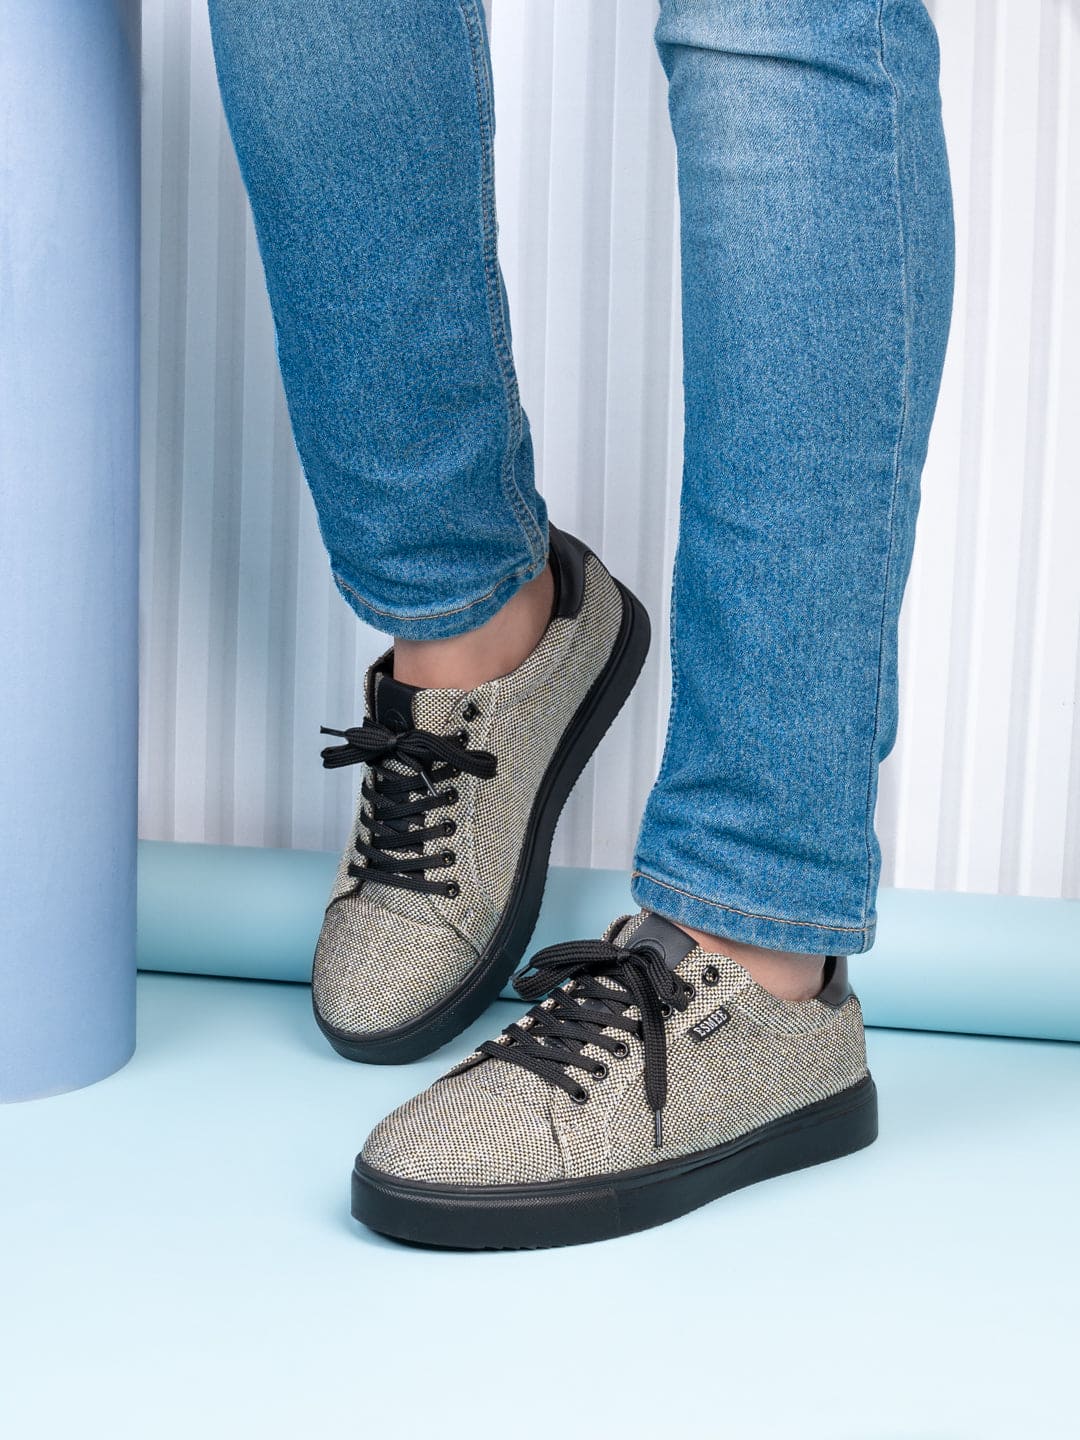 Esmee Gold Men's Eco Friendly Jute Fabric Sneakers